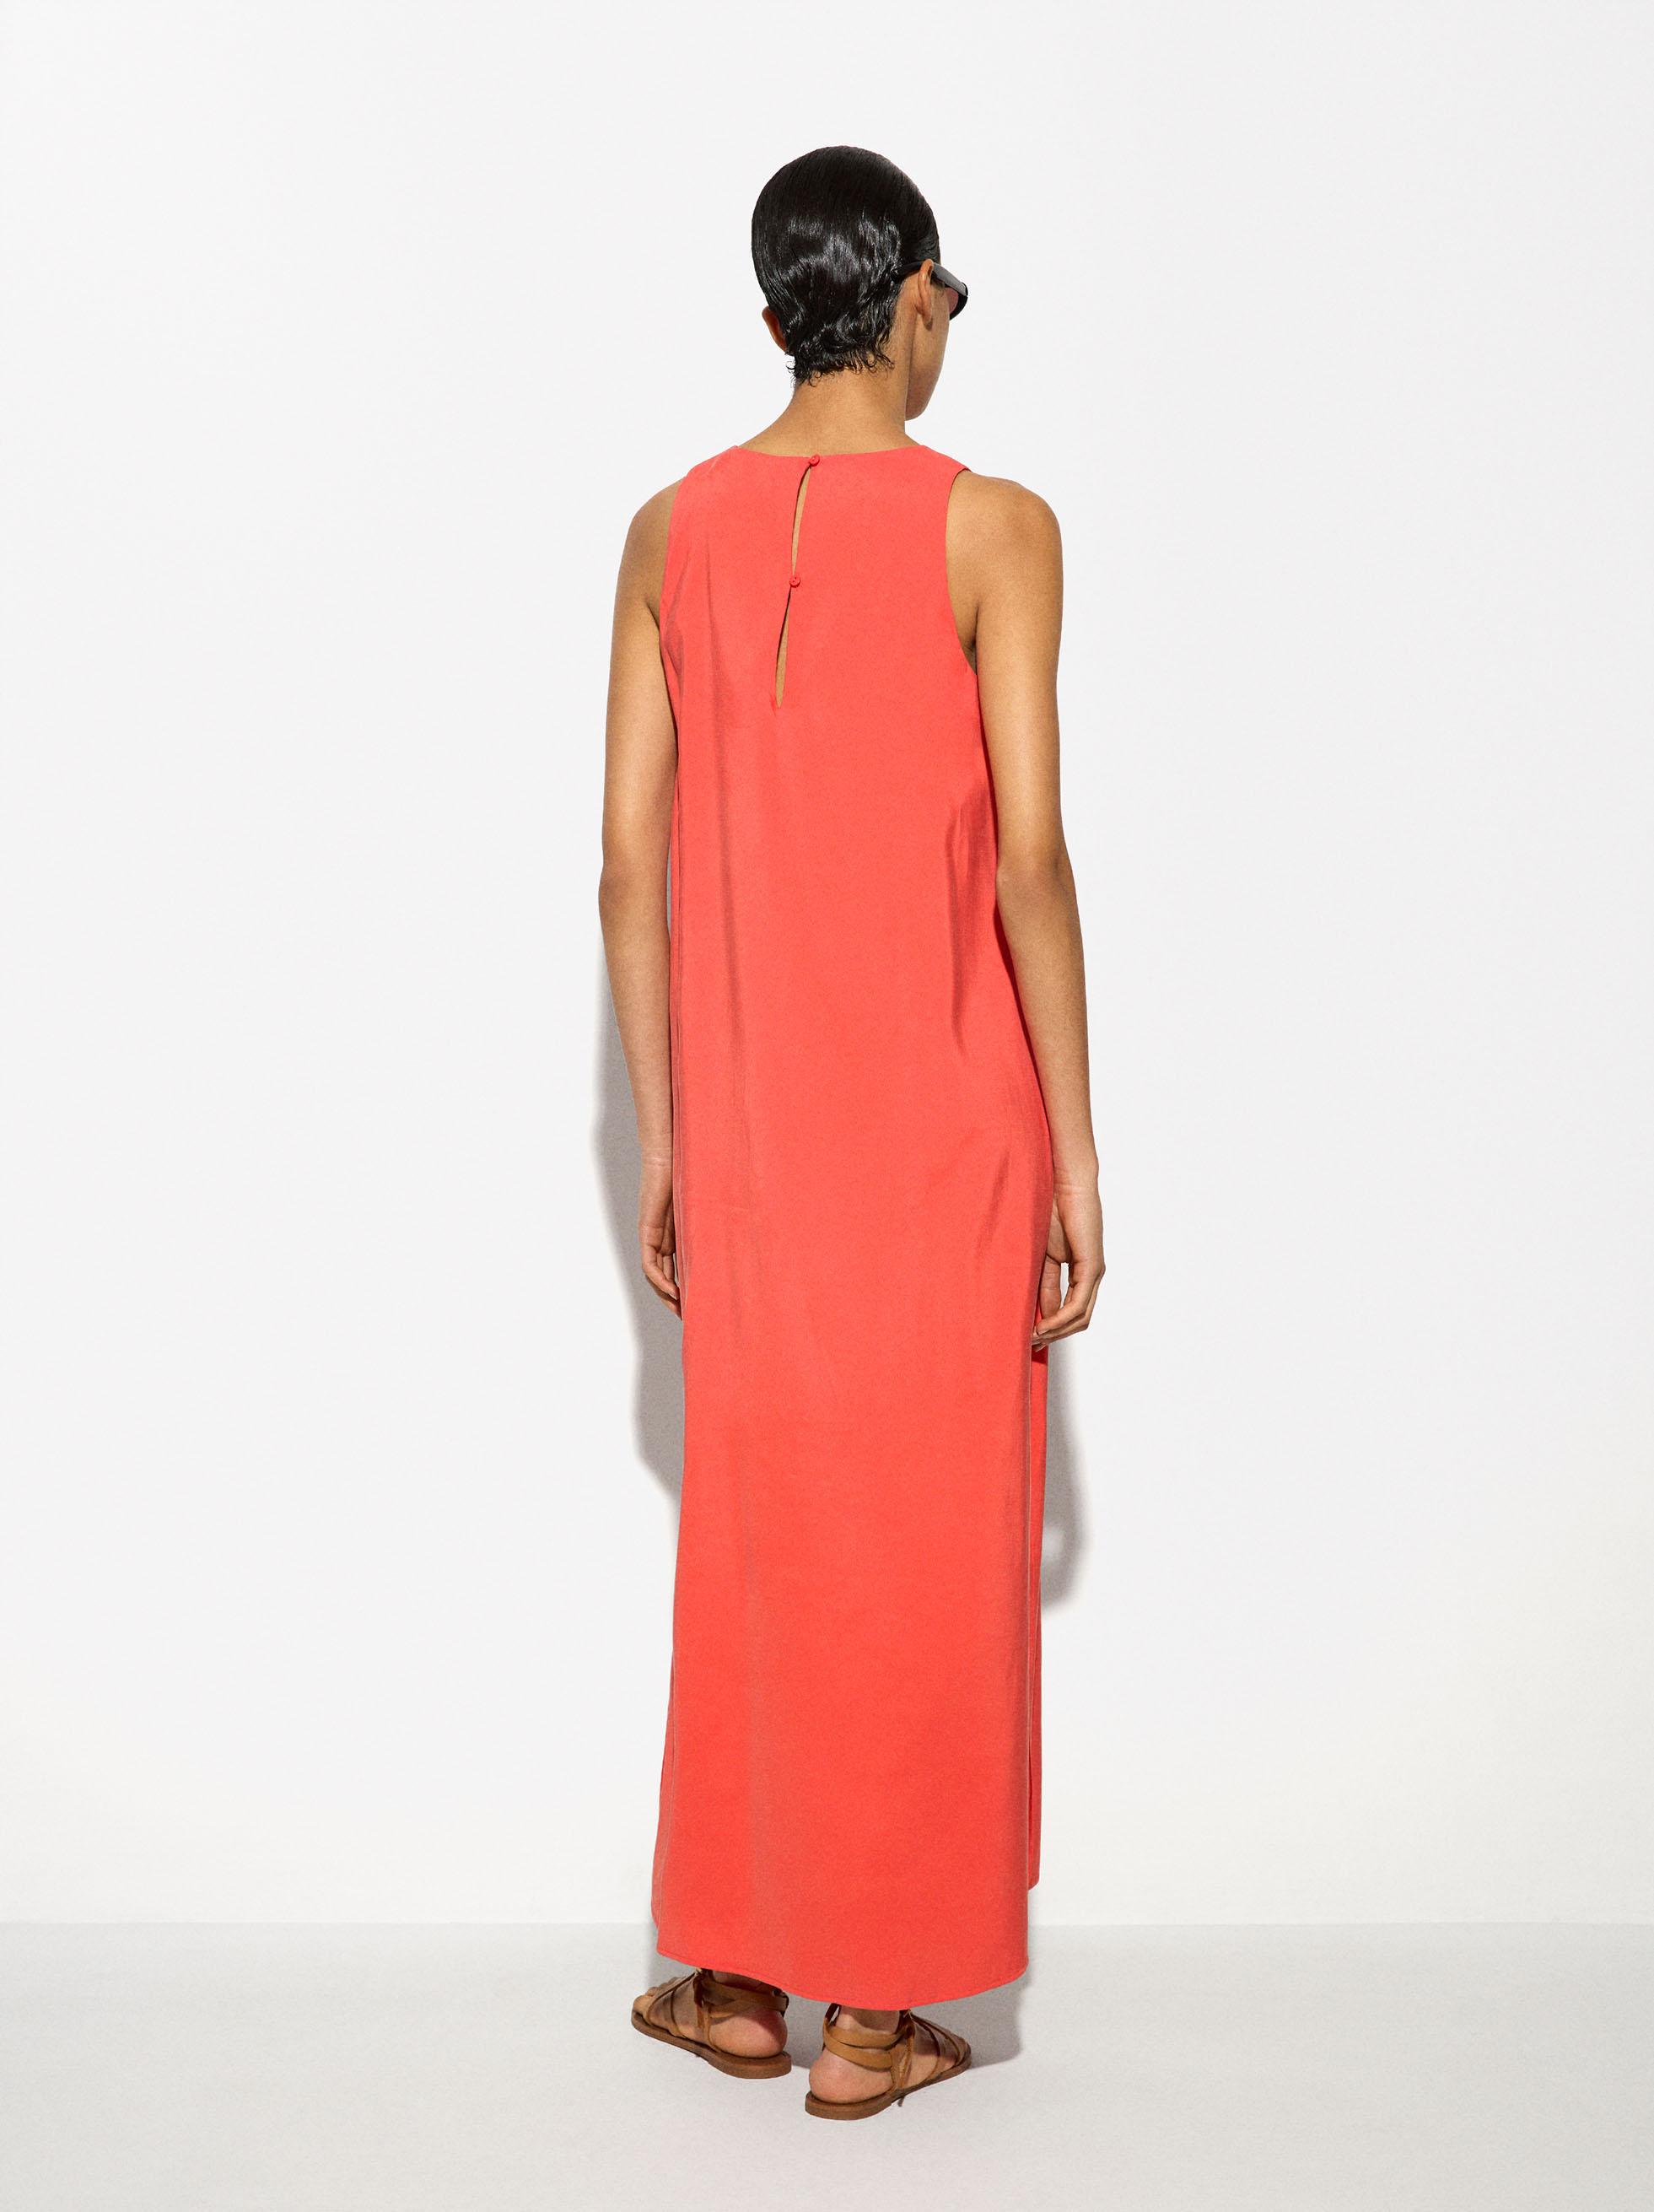 Loose-Fitting Sleeveless Dress image number 3.0